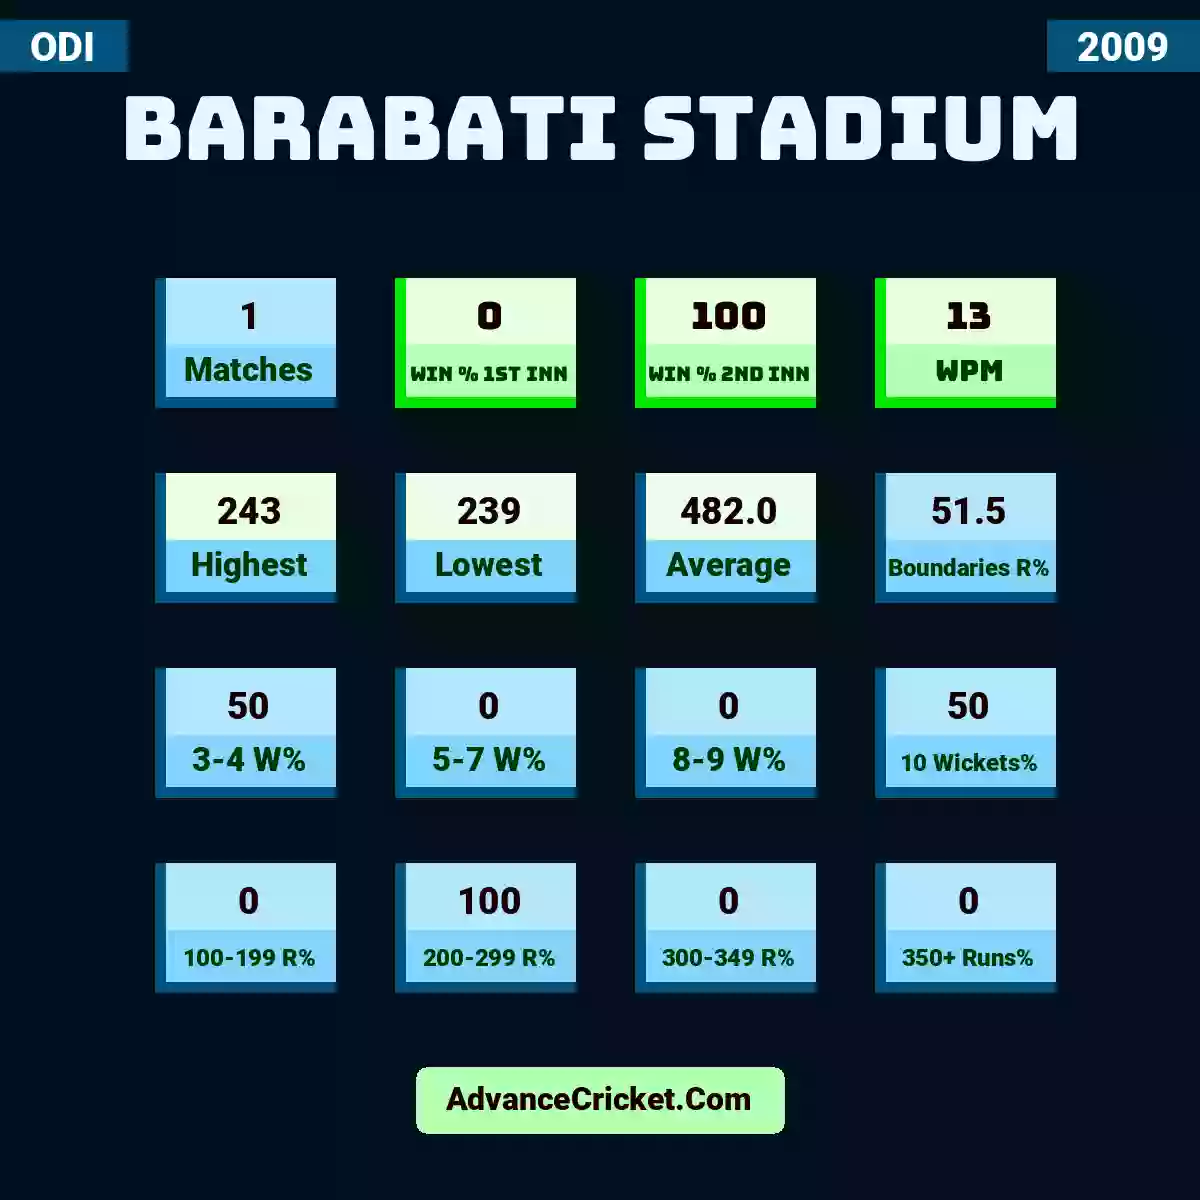 Image showing Barabati Stadium with Matches: 1, Win % 1st Inn: 0, Win % 2nd Inn: 100, WPM: 13, Highest: 243, Lowest: 239, Average: 482.0, Boundaries R%: 51.5, 3-4 W%: 50, 5-7 W%: 0, 8-9 W%: 0, 10 Wickets%: 50, 100-199 R%: 0, 200-299 R%: 100, 300-349 R%: 0, 350+ Runs%: 0.